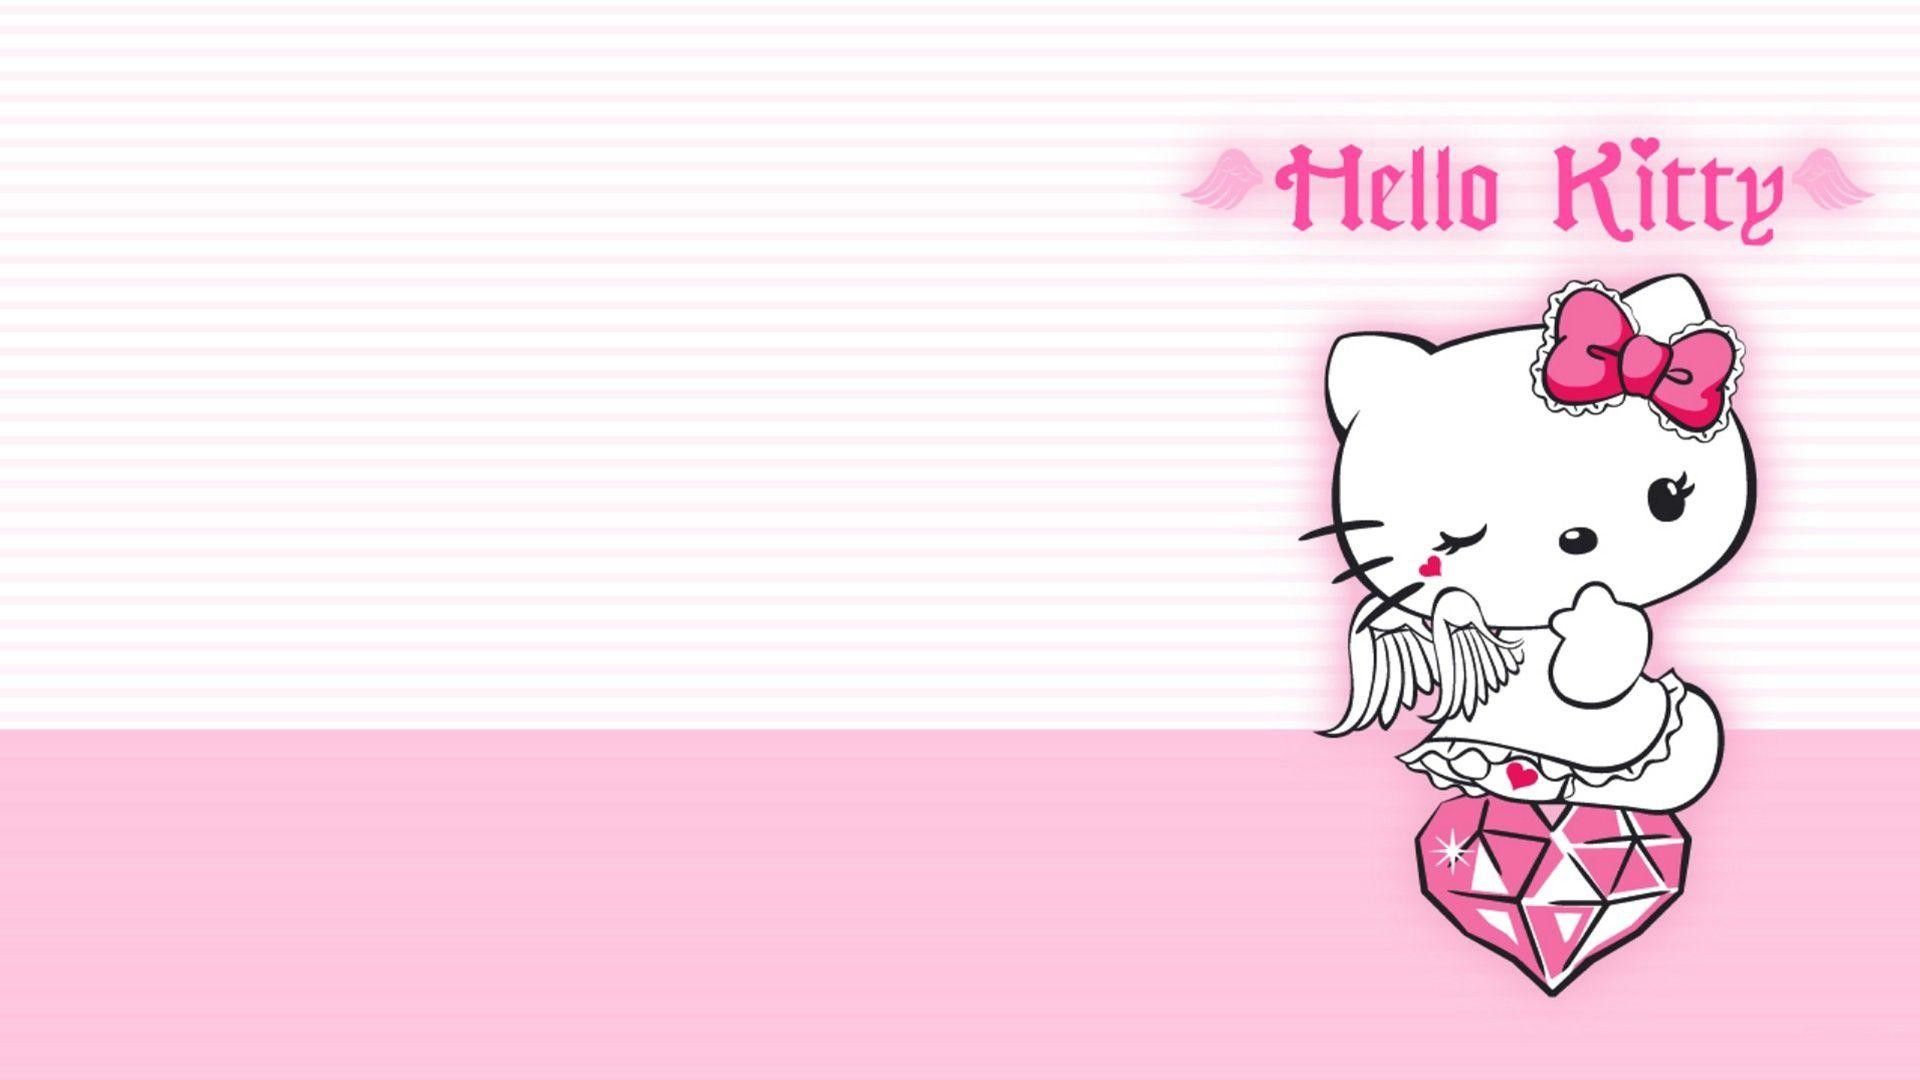 Hello kitty wallpaper hd - Hello Kitty, Sanrio